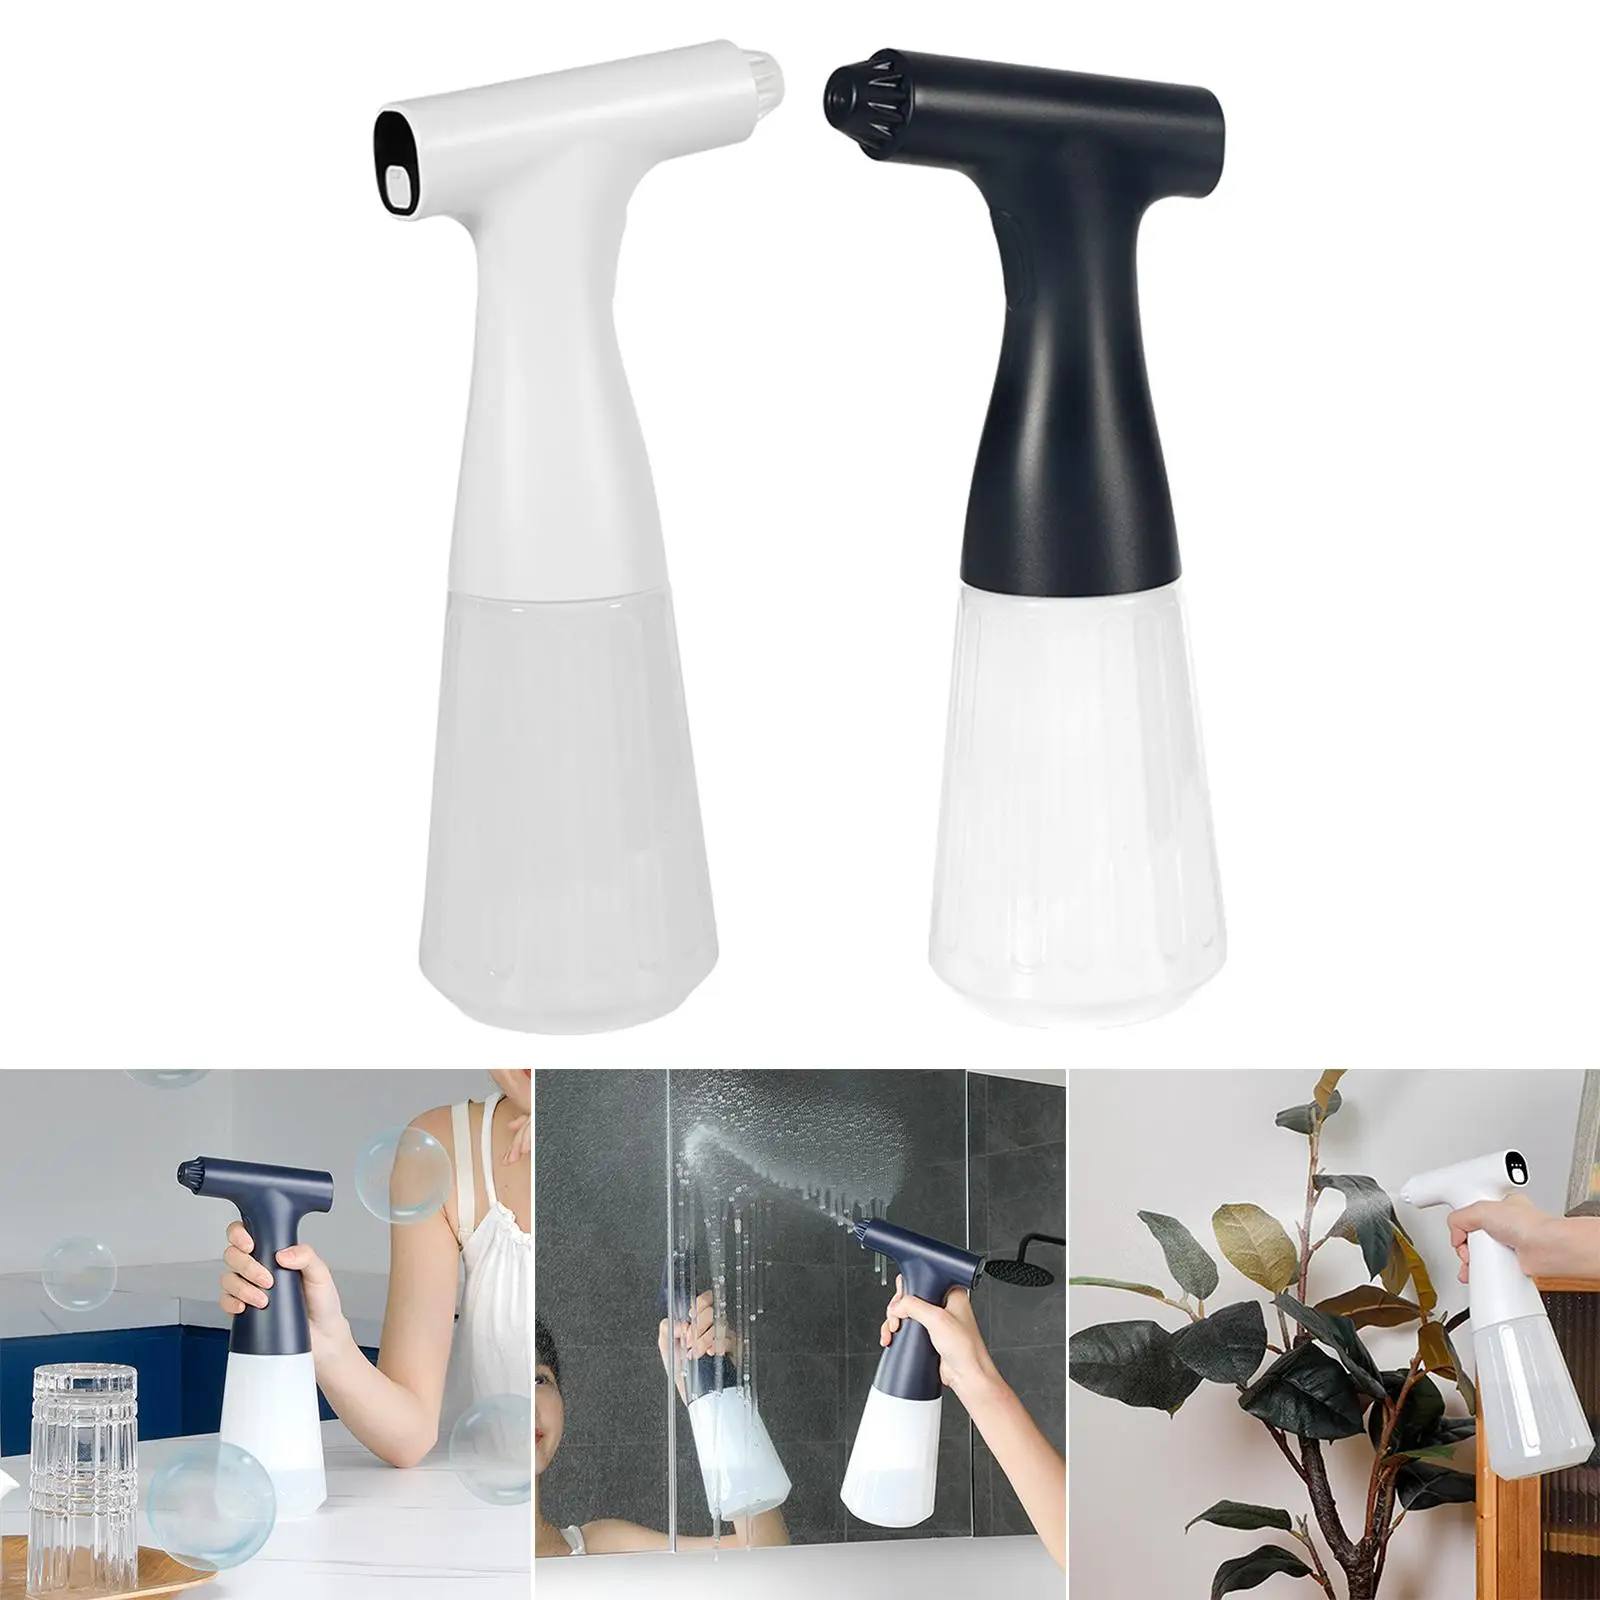 500ml Wireless Sprayer Handheld Rechargeable Disinfectant Fogger Spray Machine for Plants Car Bathroom Beauty Salon